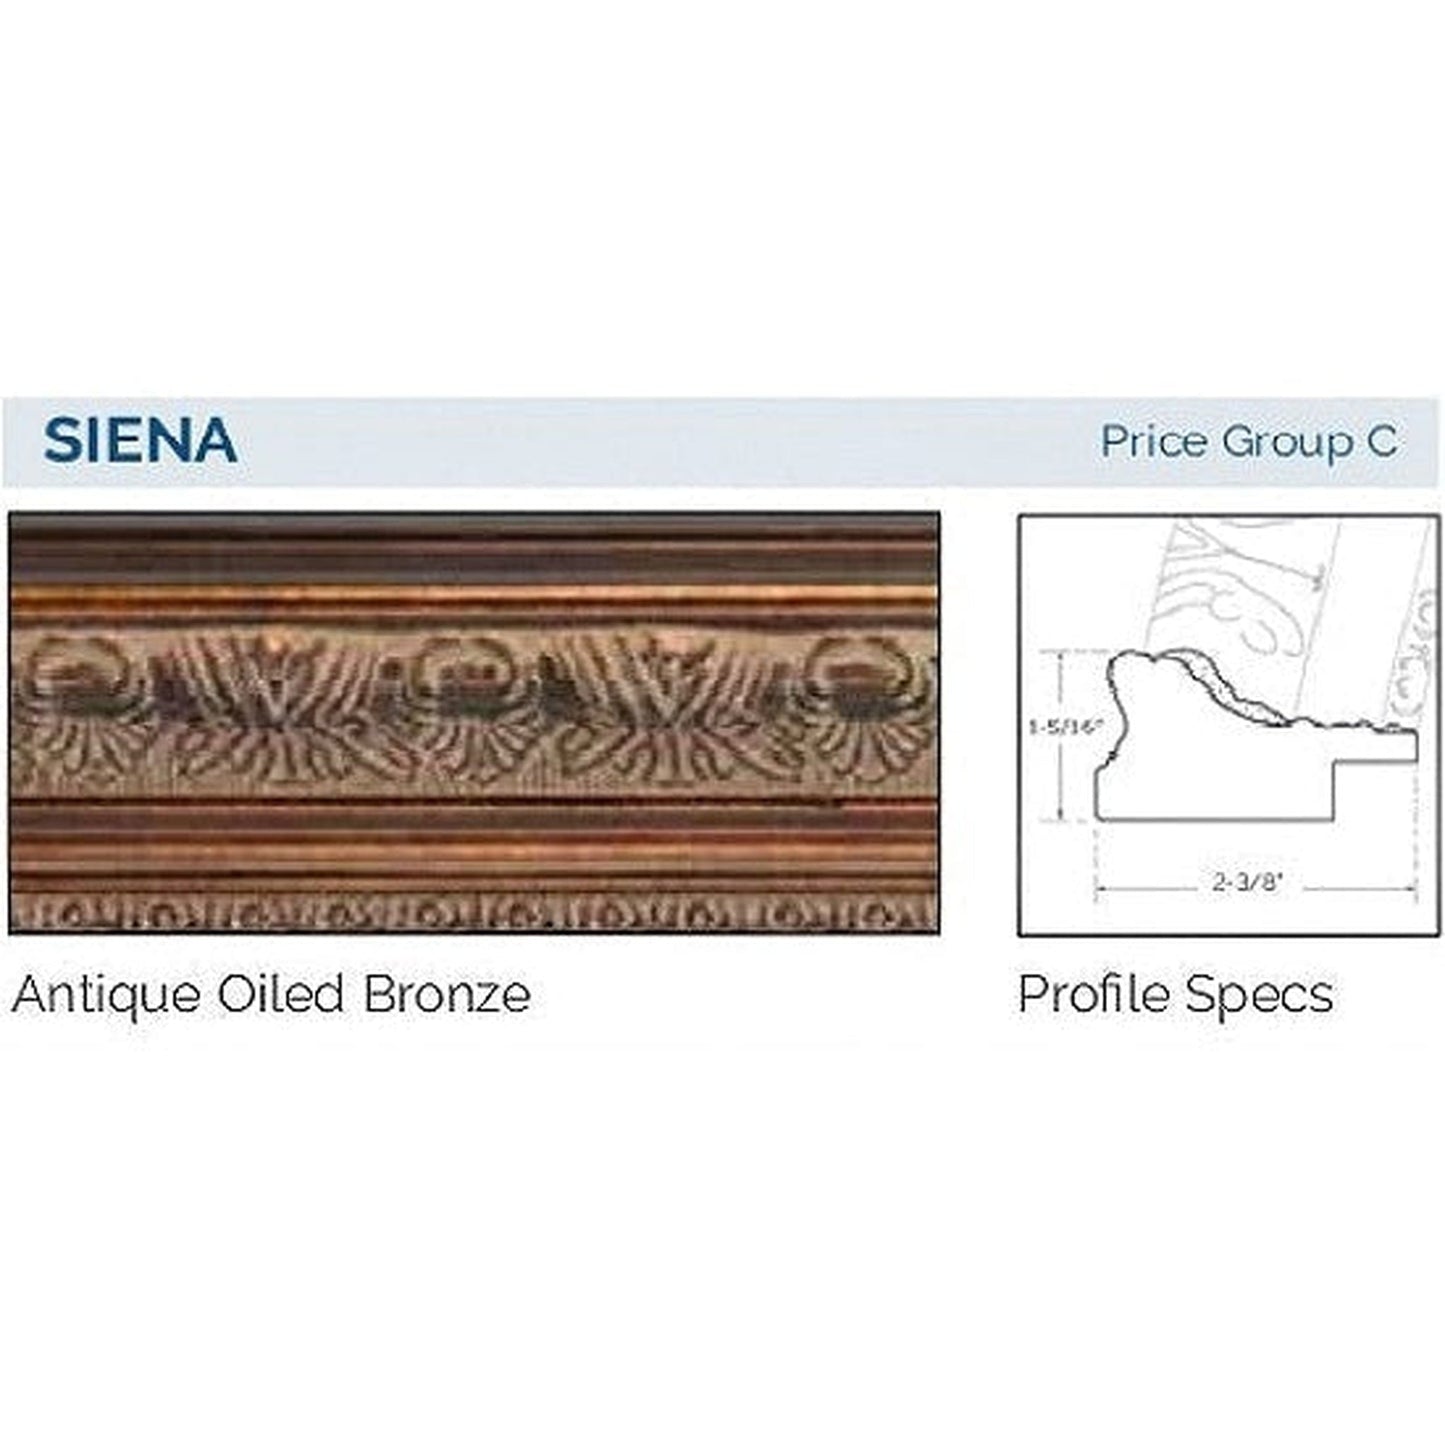 Afina Signature 33" x 23" Siena Antique Oiled Bronze Recessed Retro-Fit Double Door Medicine Cabinet With Beveled Edge Mirror